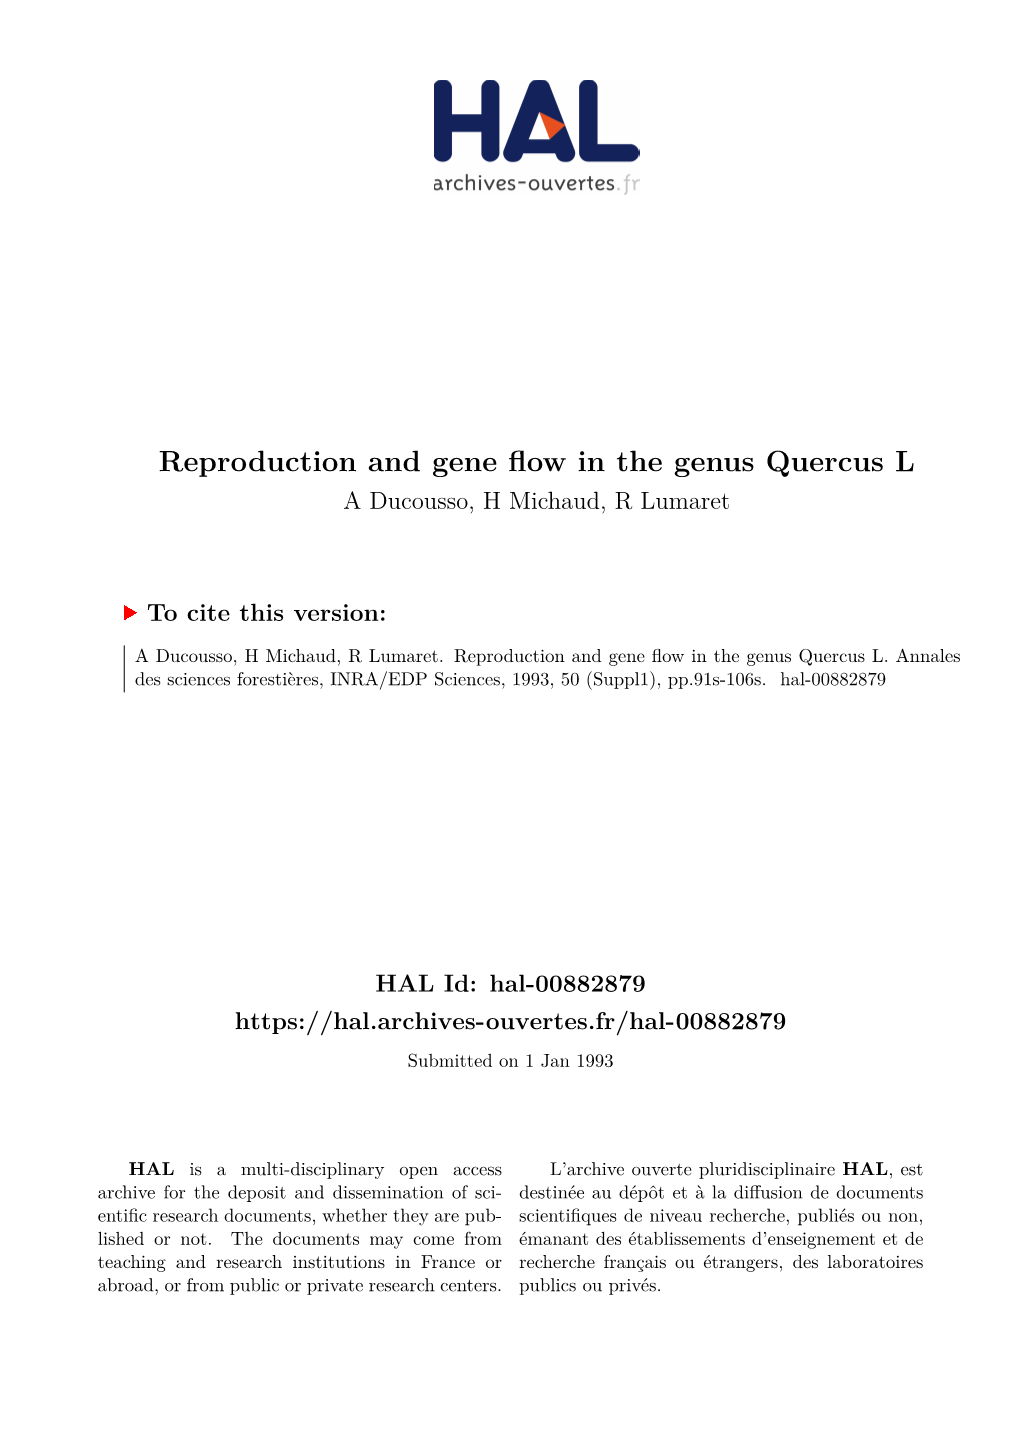 Reproduction and Gene Flow in the Genus Quercus L a Ducousso, H Michaud, R Lumaret